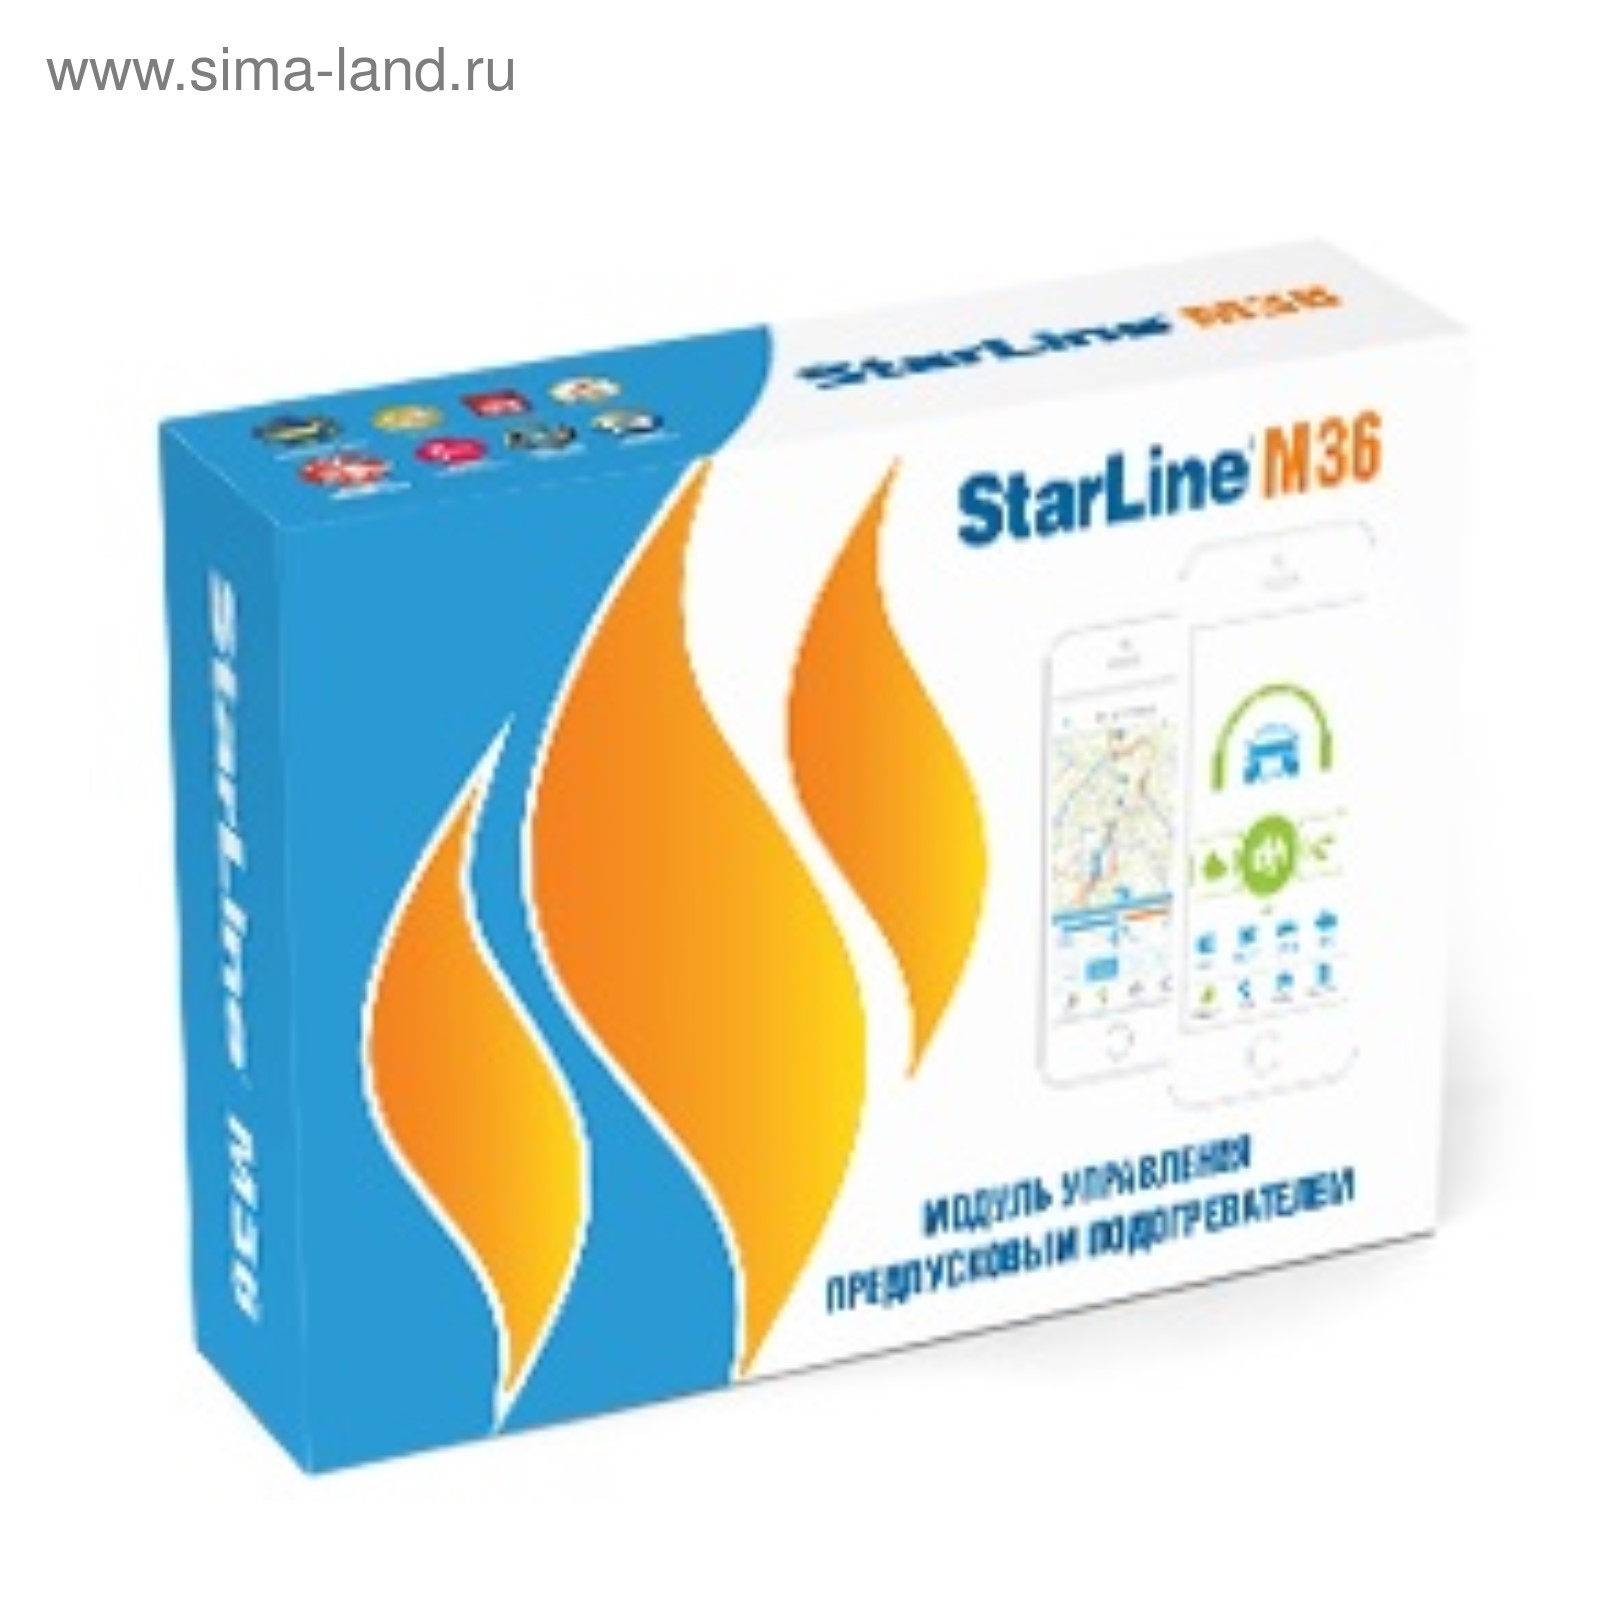 Starline M36 GPS